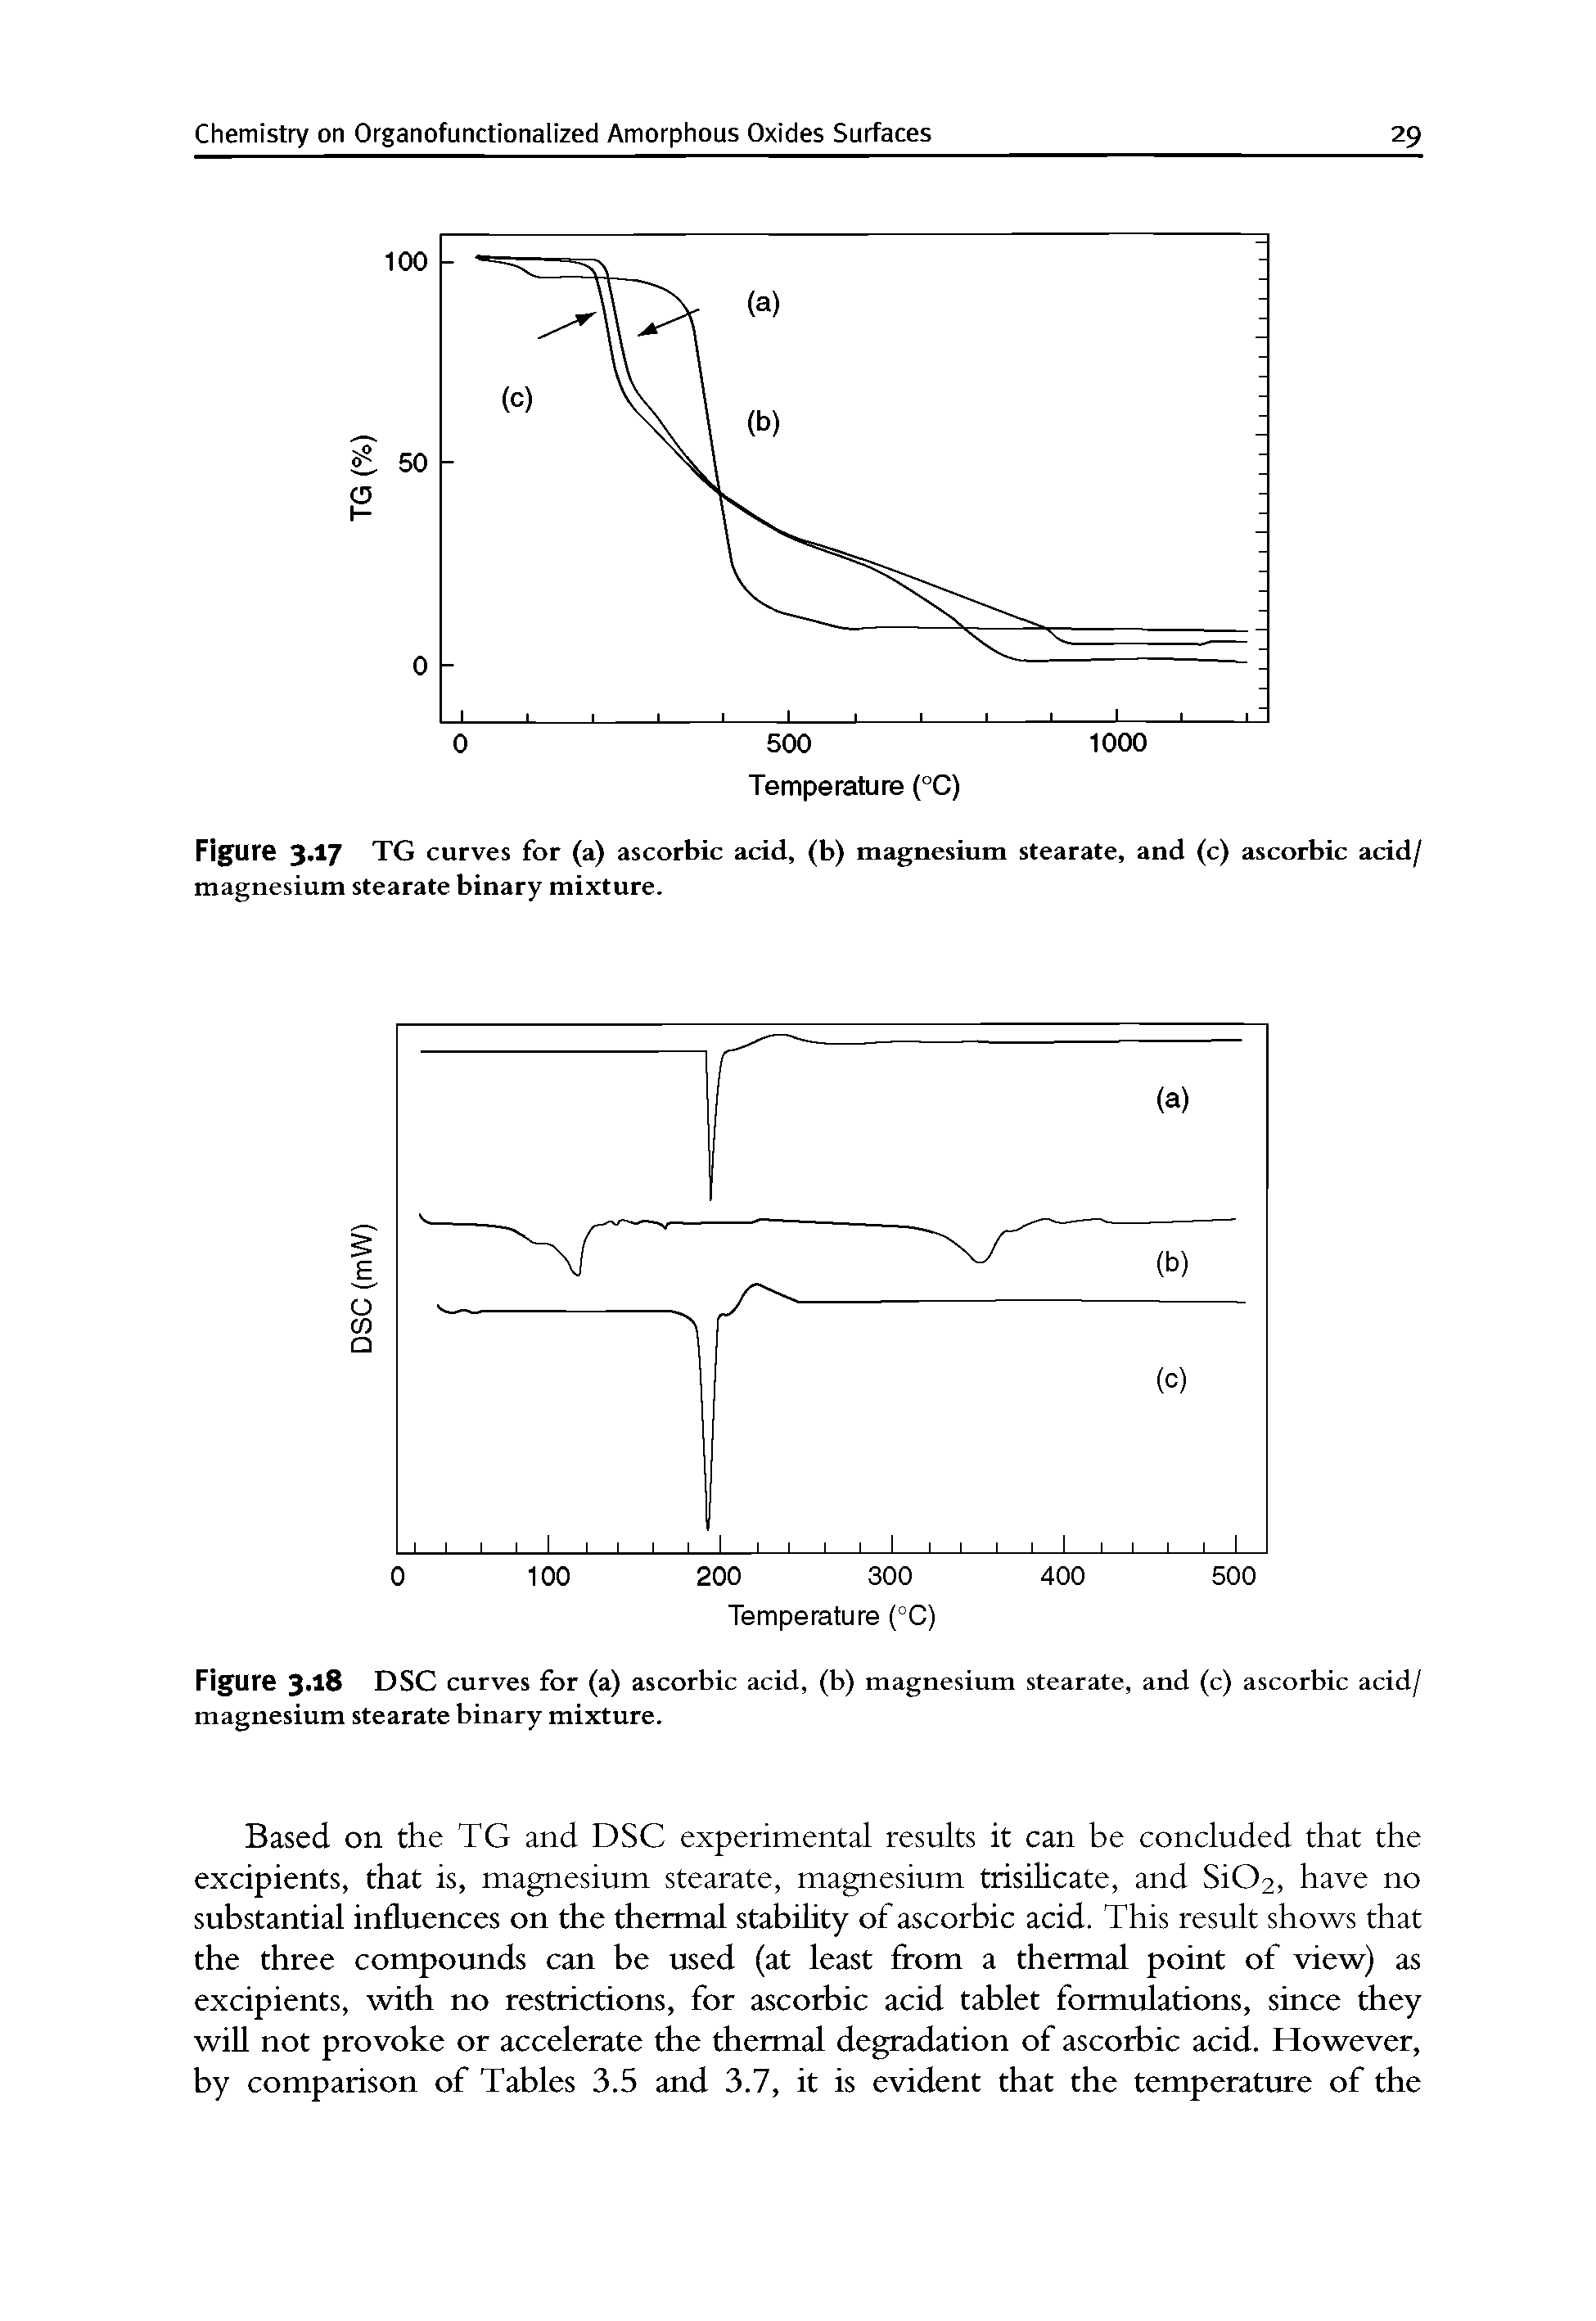 Figure 3.17 TG curves for (a) ascorbic acid, (b) magnesium stearate, and (c) ascorbic acid/ magnesium stearate binary mixture.